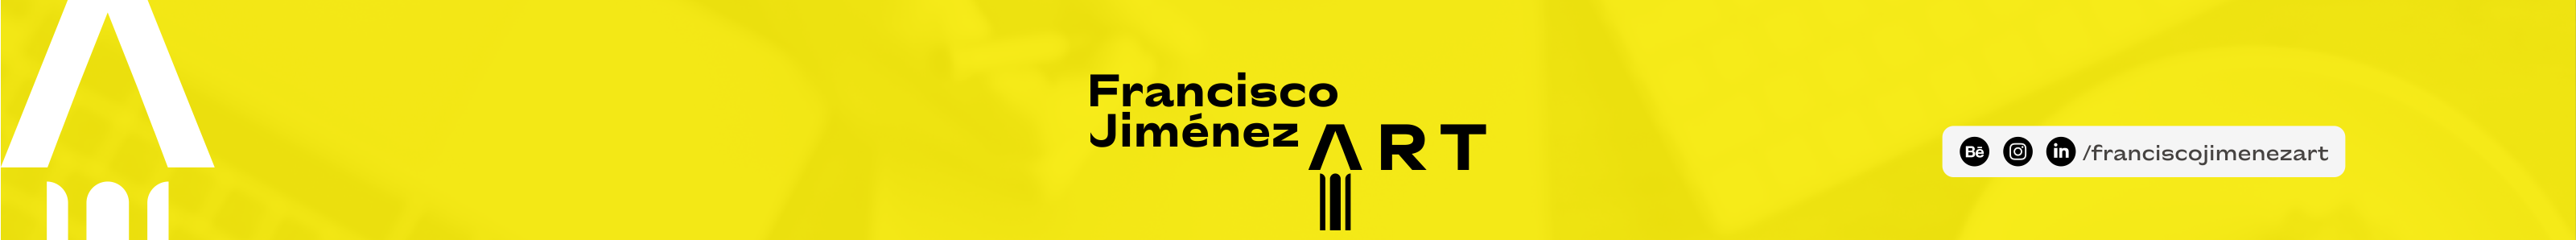 Francisco Jiménez Aranda's profile banner